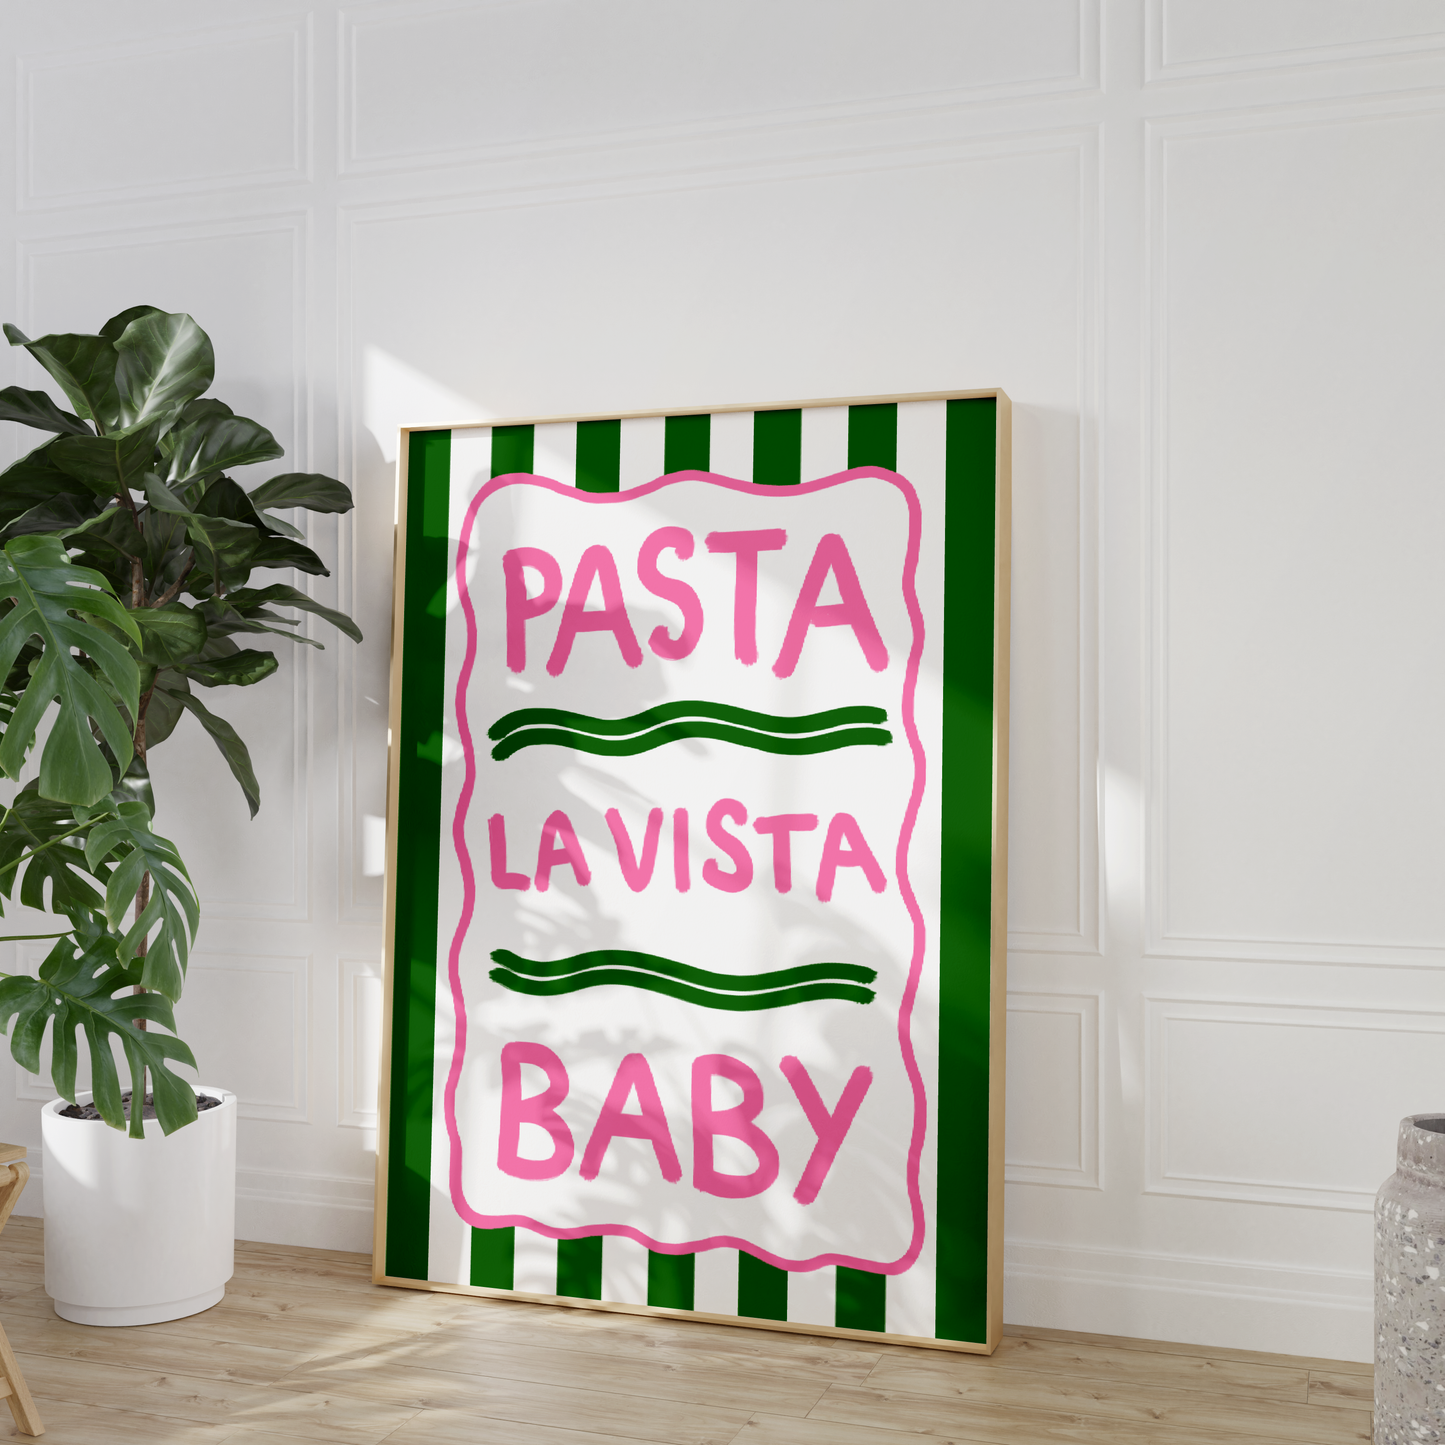 'Pasta La Vista Baby' Illustration